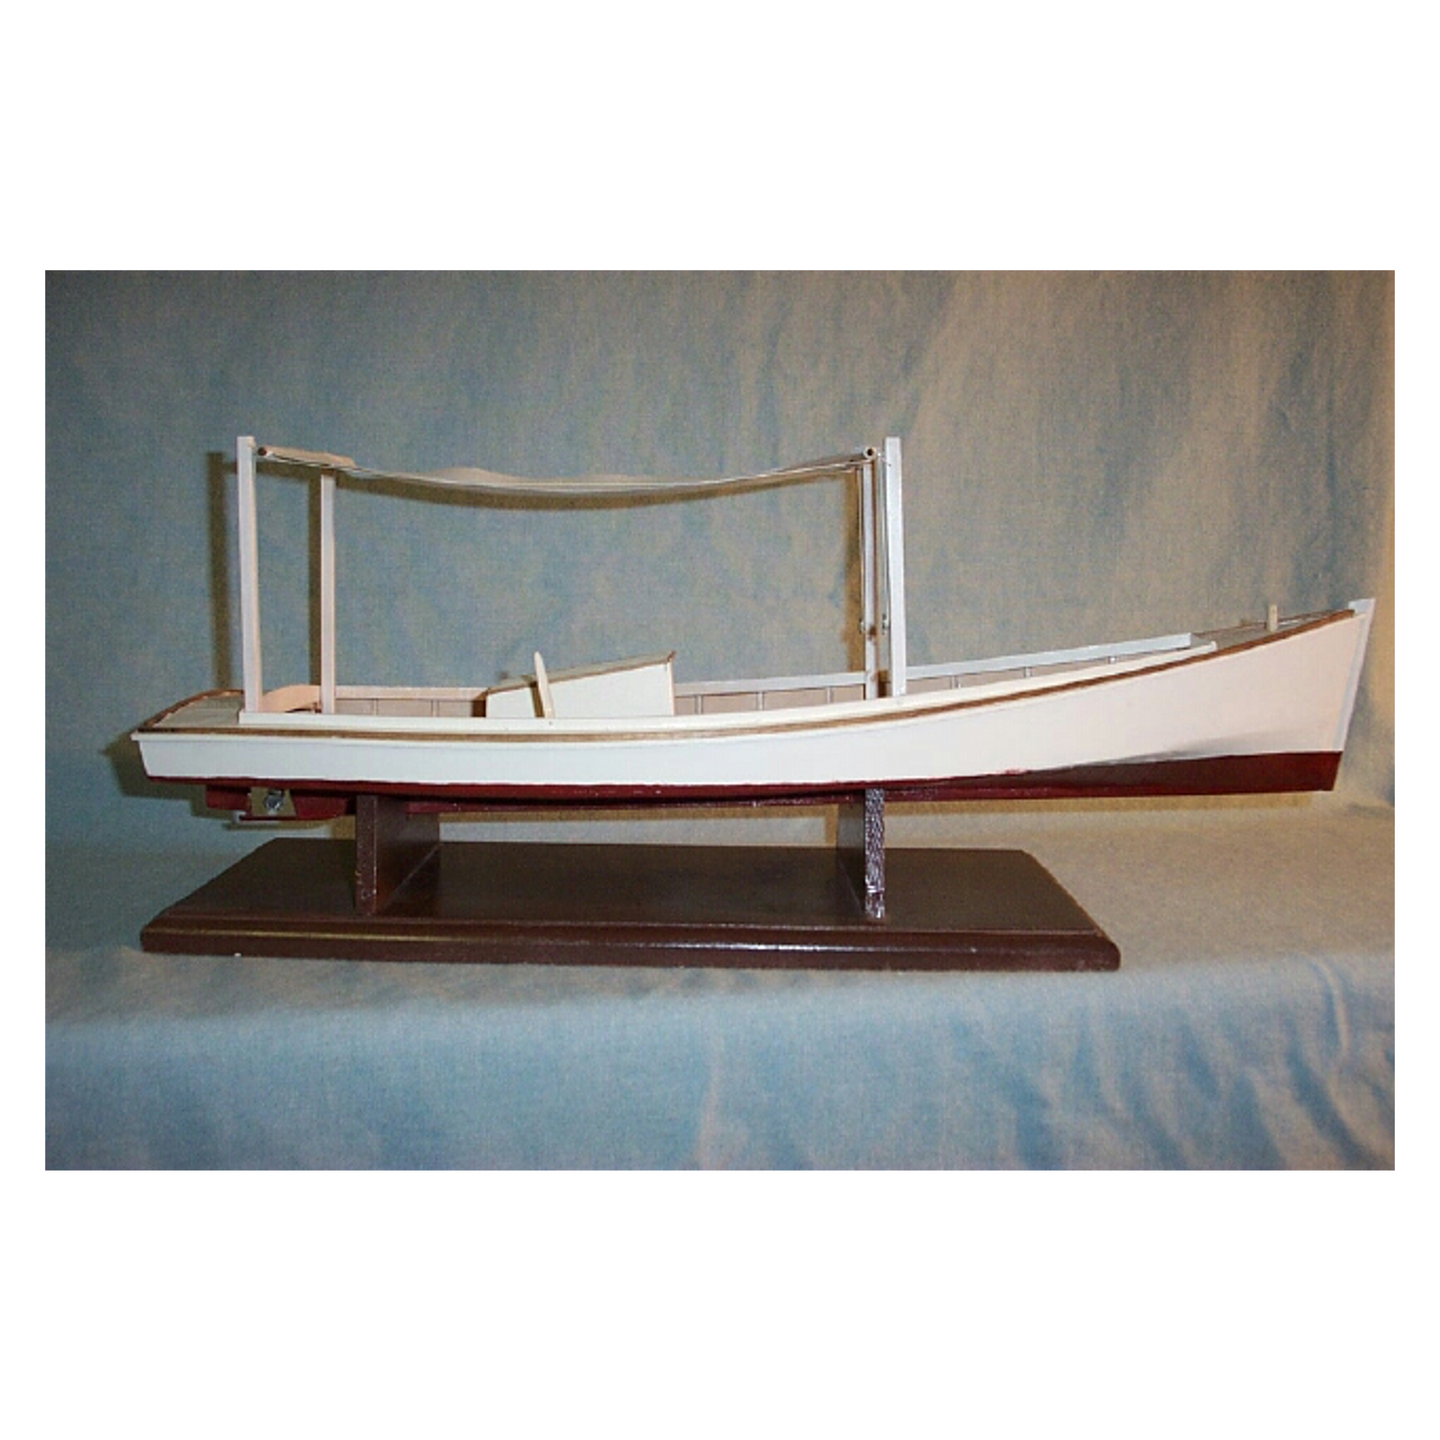 Buy Smith Island Crabbing Boat Model Ship Kit – Adama Model Ships